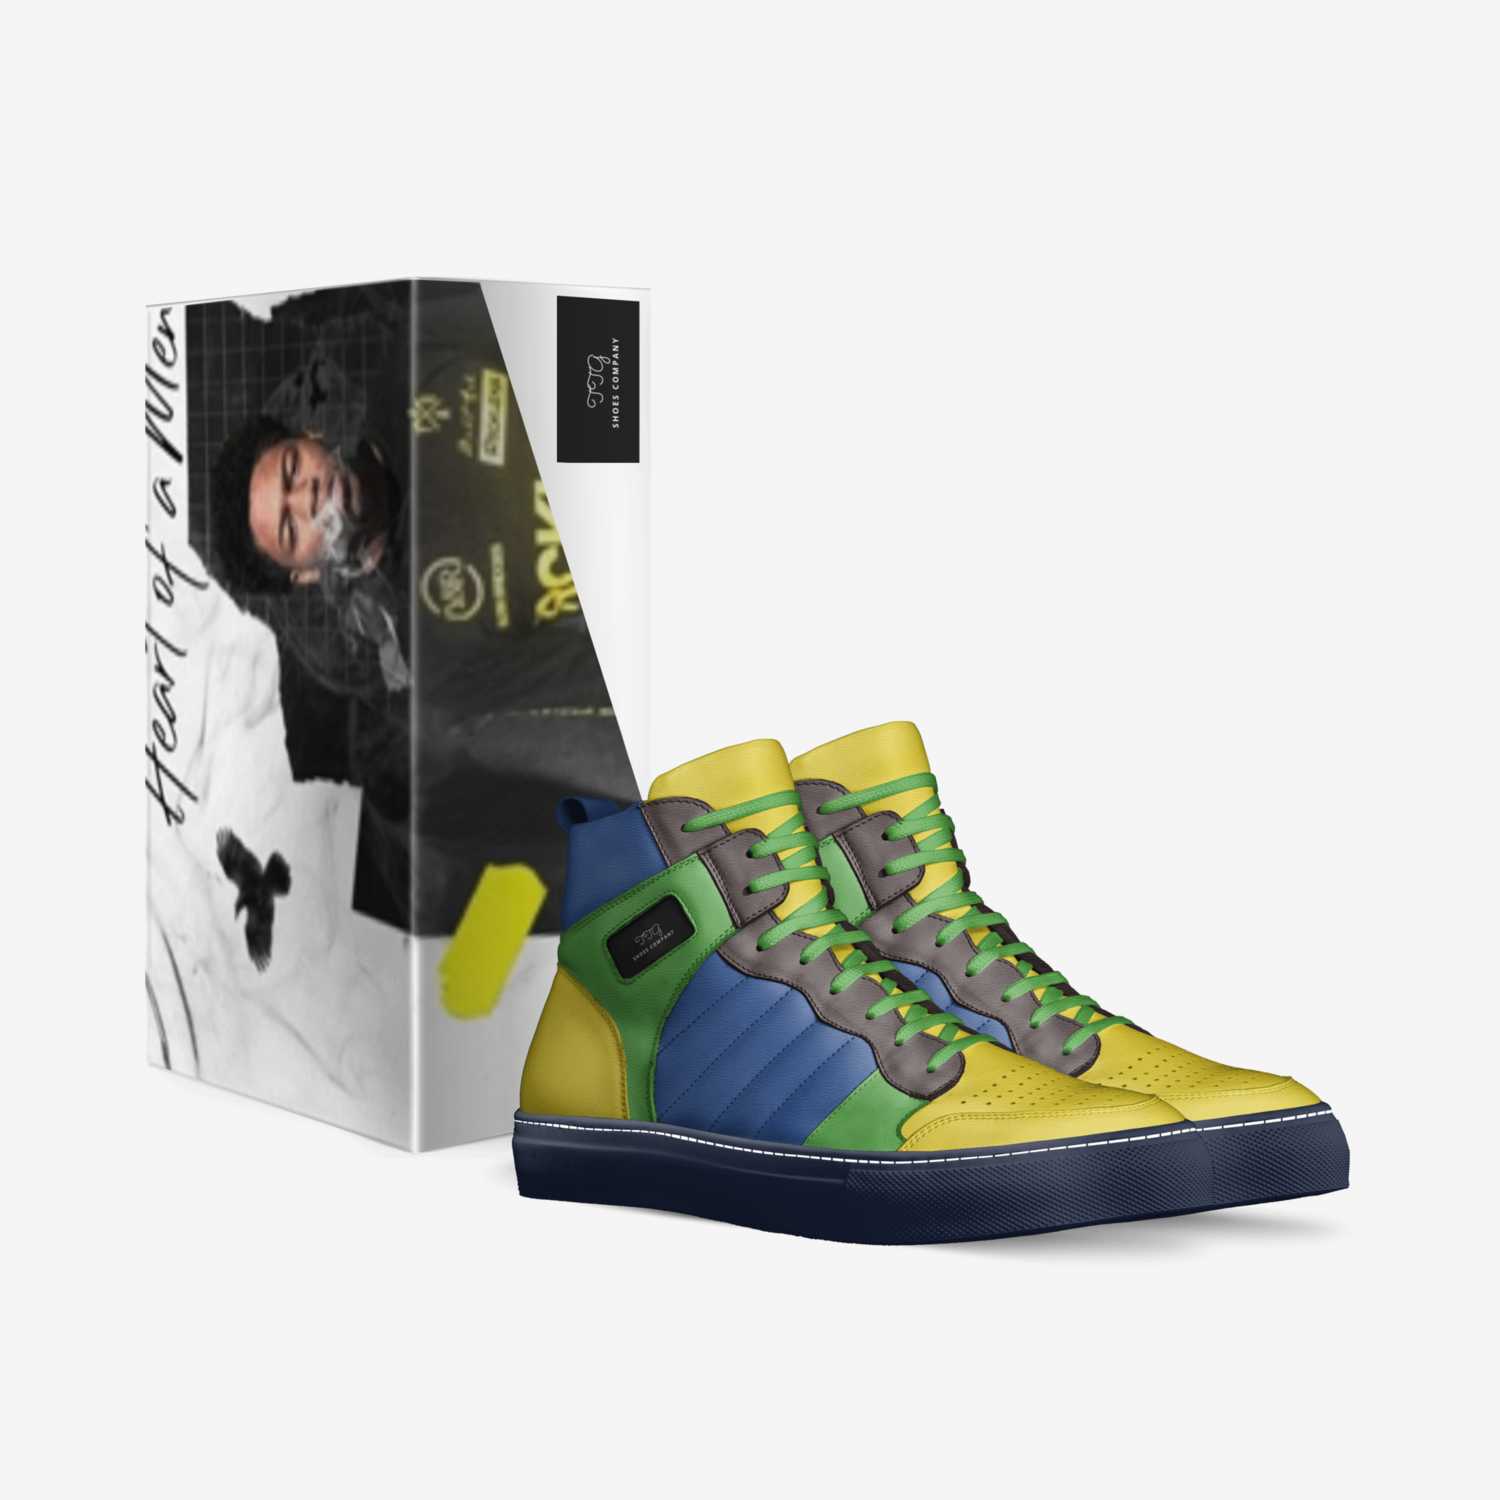 TTG custom made in Italy shoes by Tameshia Dixon | Box view